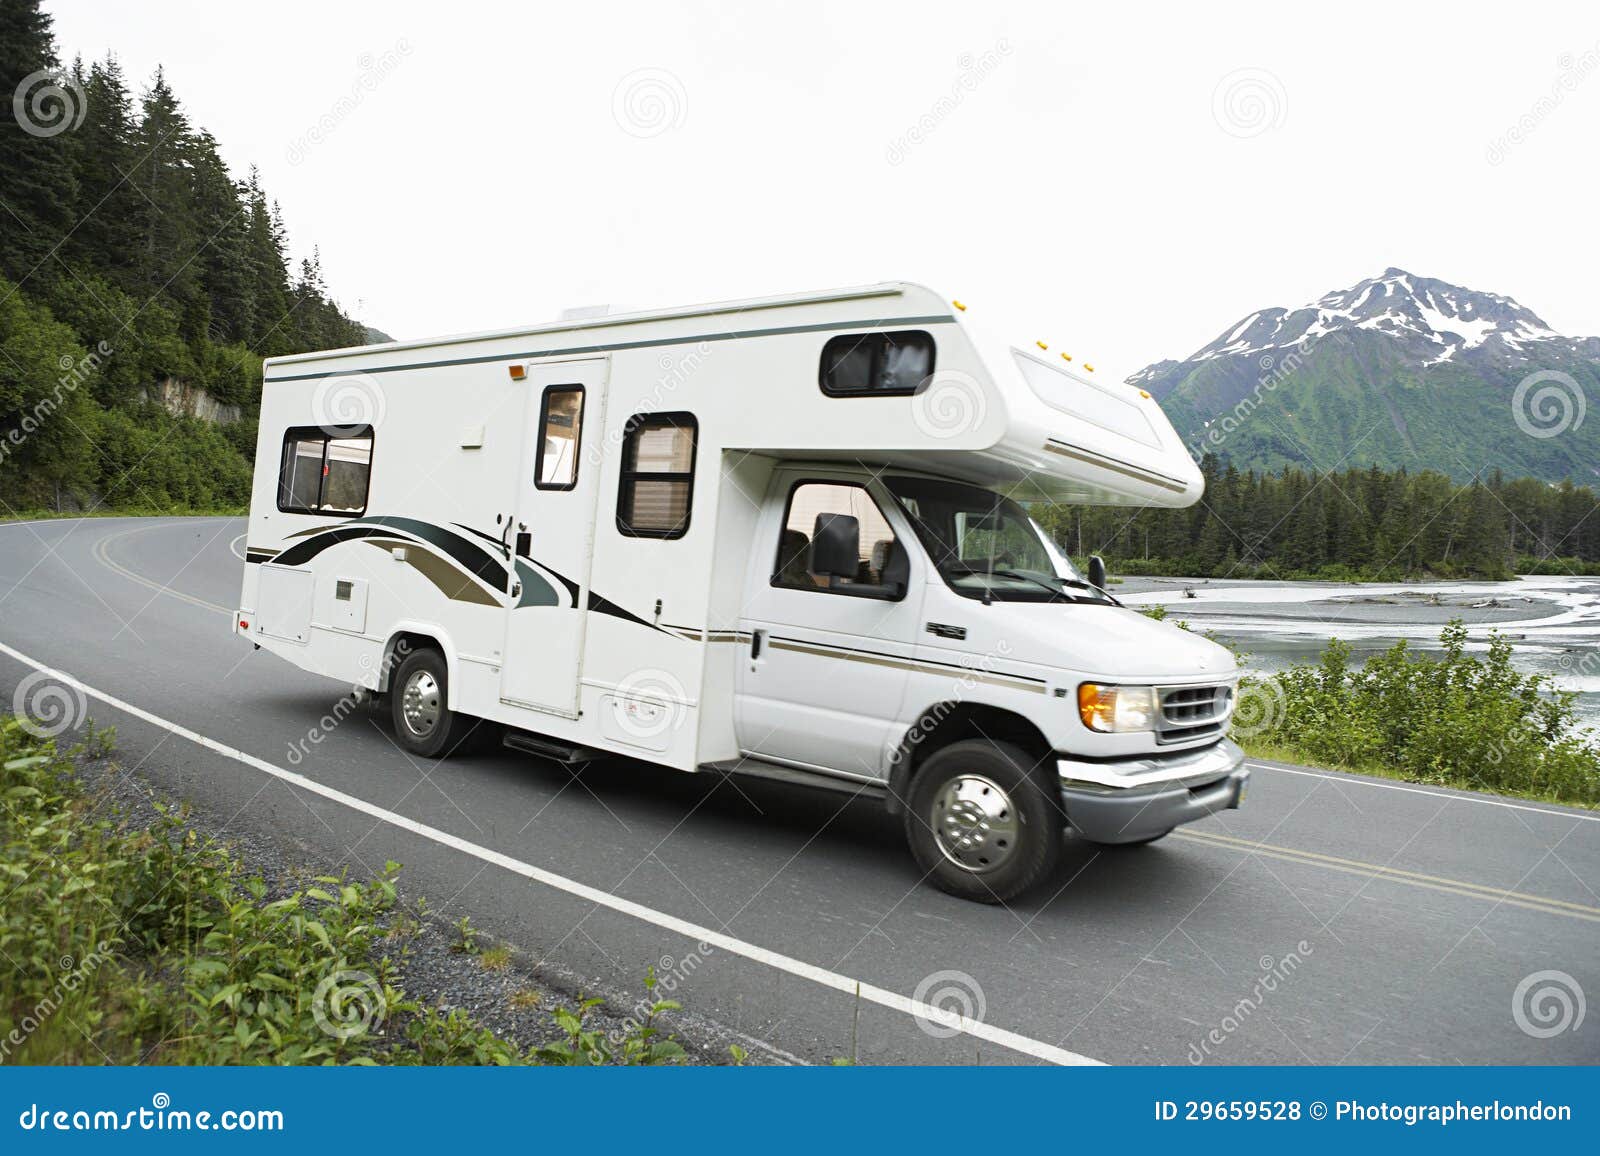 usa, alaska, recreational vehicle driving on road